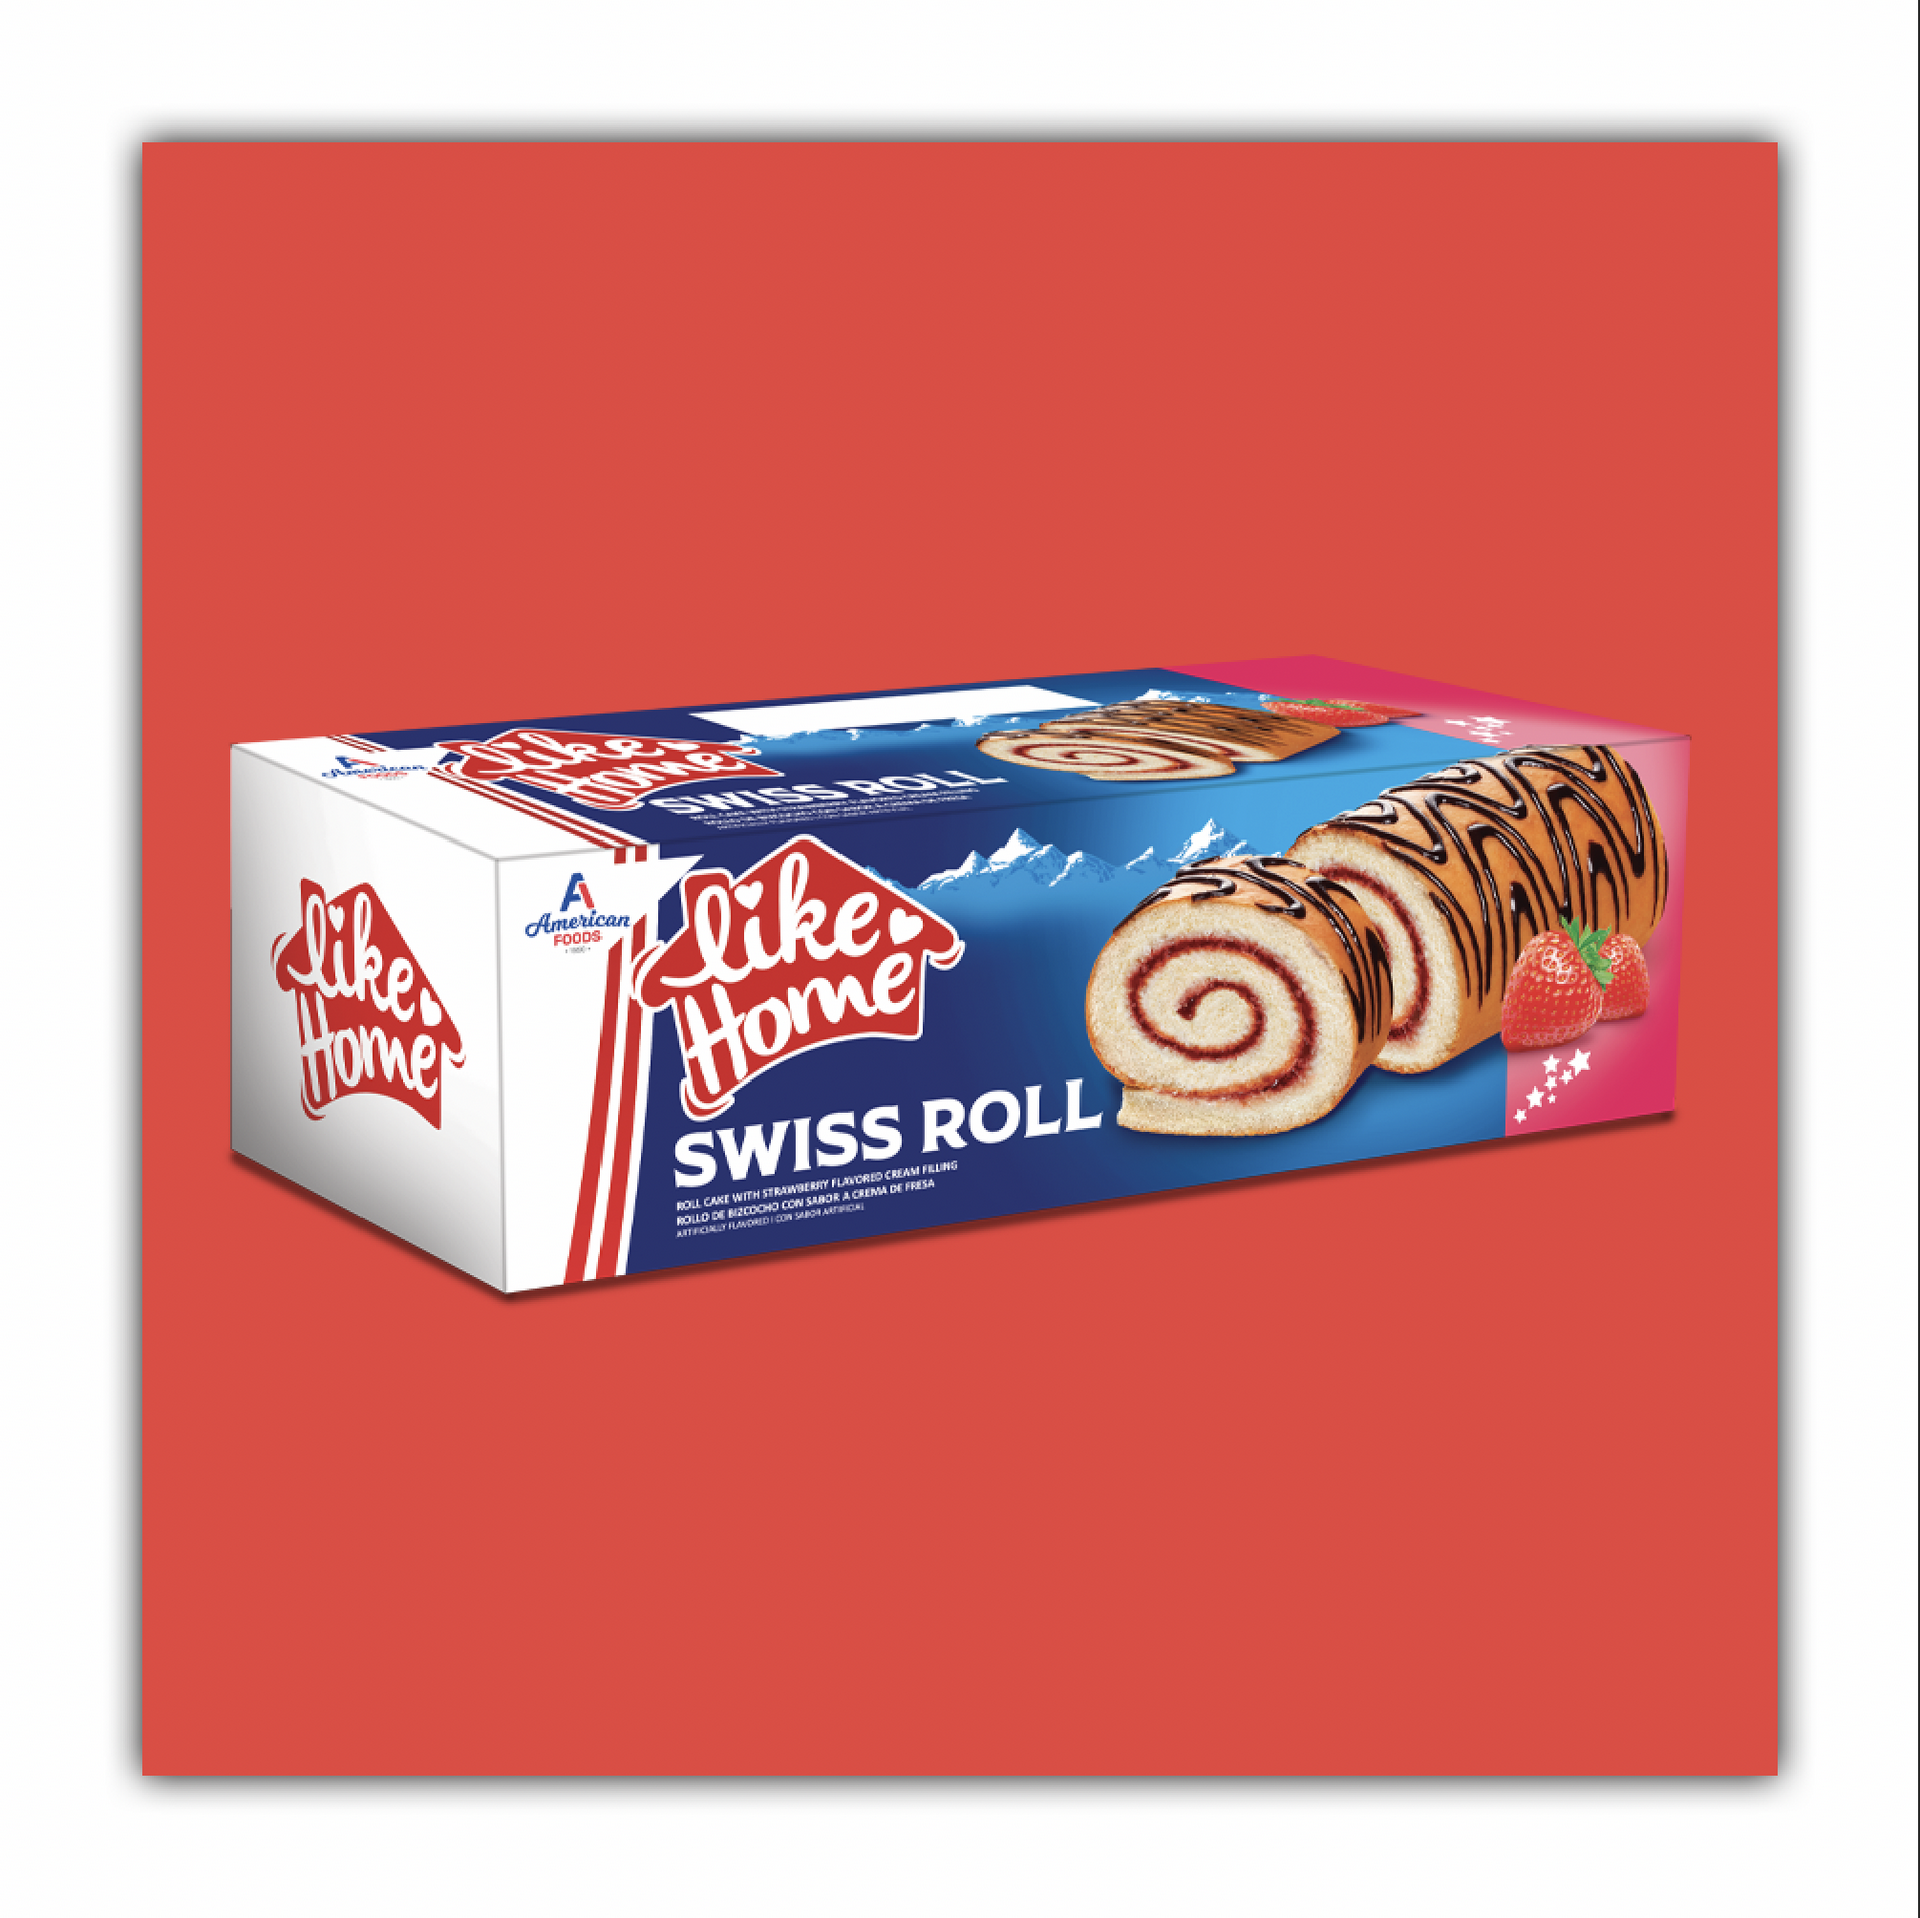 Like-Home-Swiss-Roll-Strawberry